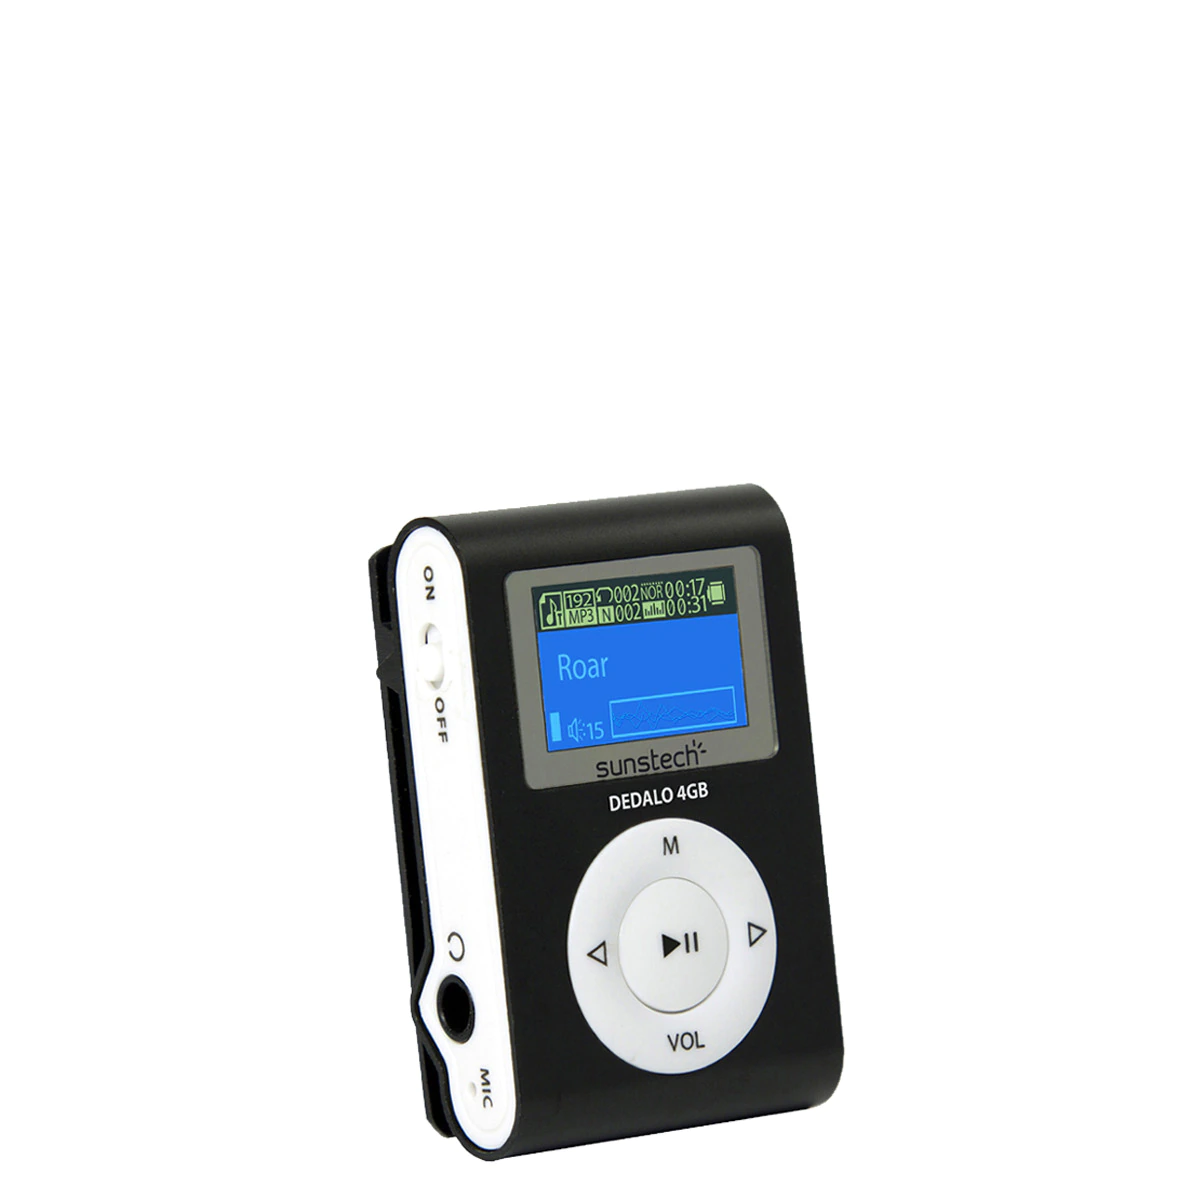 Reproductor MP3 Sunstech Dedalo III Negro de 4 GB con radio FM